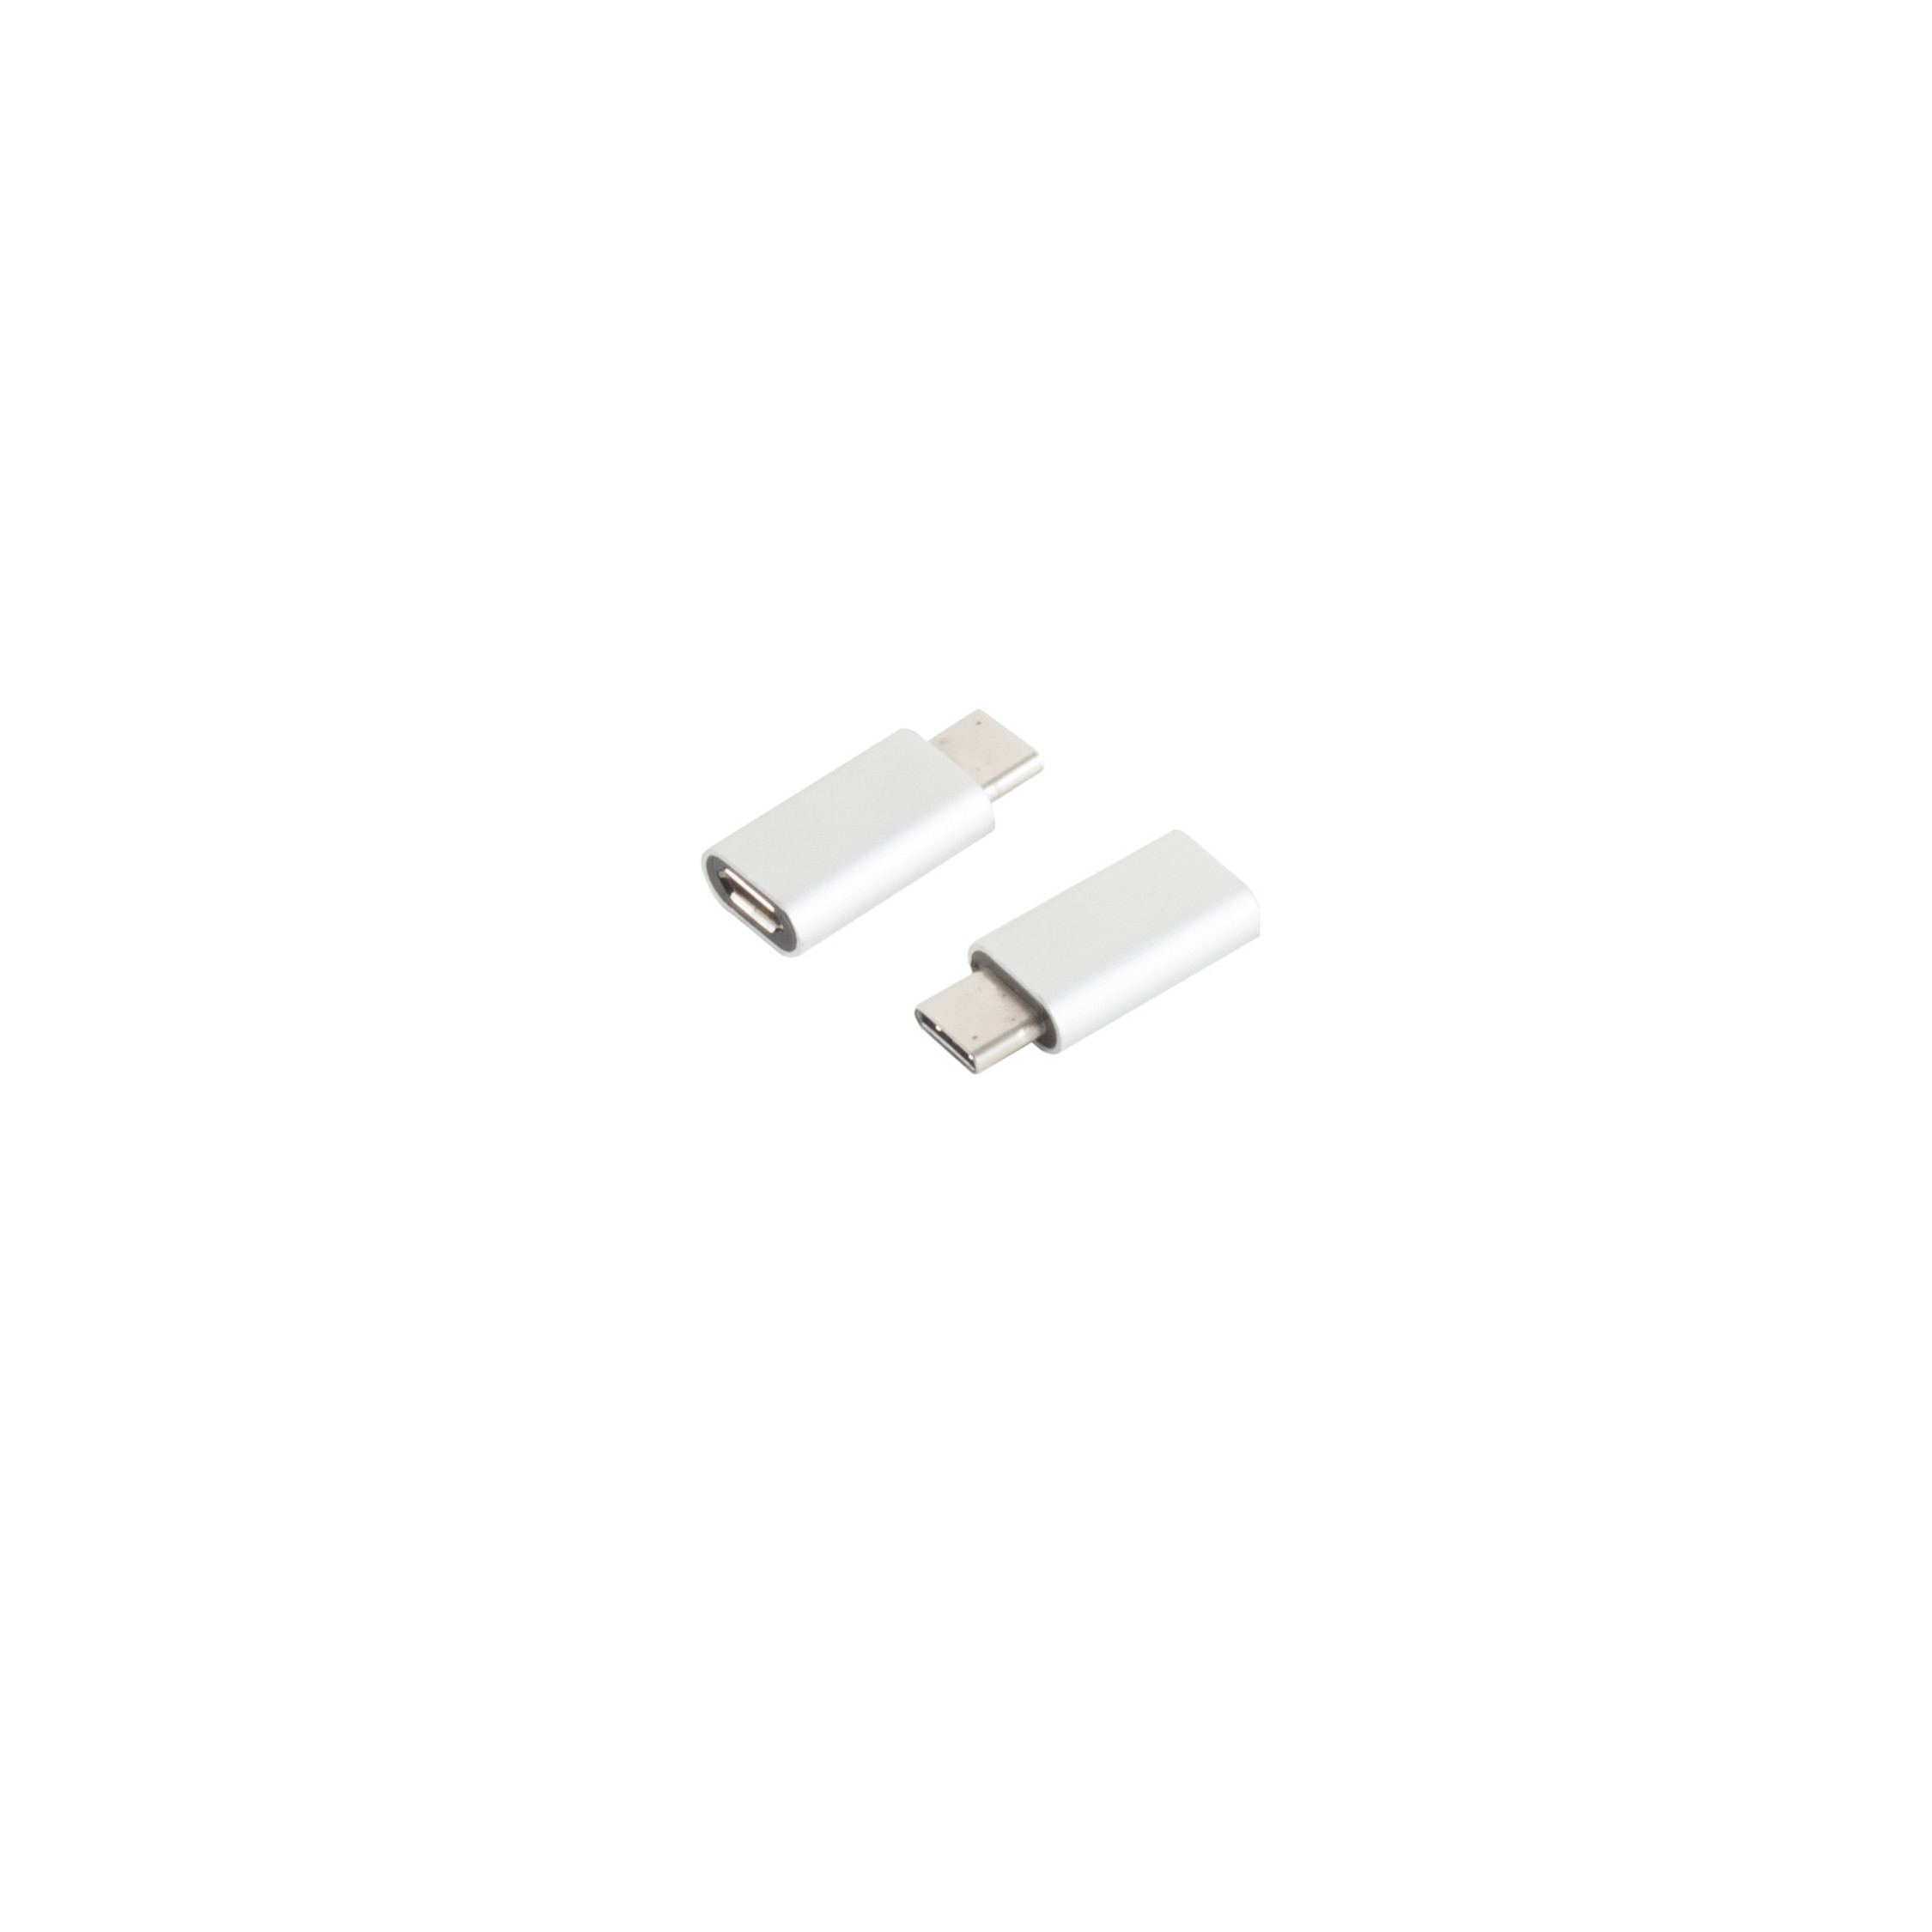 USB Buchse USB-C 3.1 USB Stecker/ Adapter, MAXIMUM 2.0 Adapter S/CONN B C Micro CONNECTIVITY